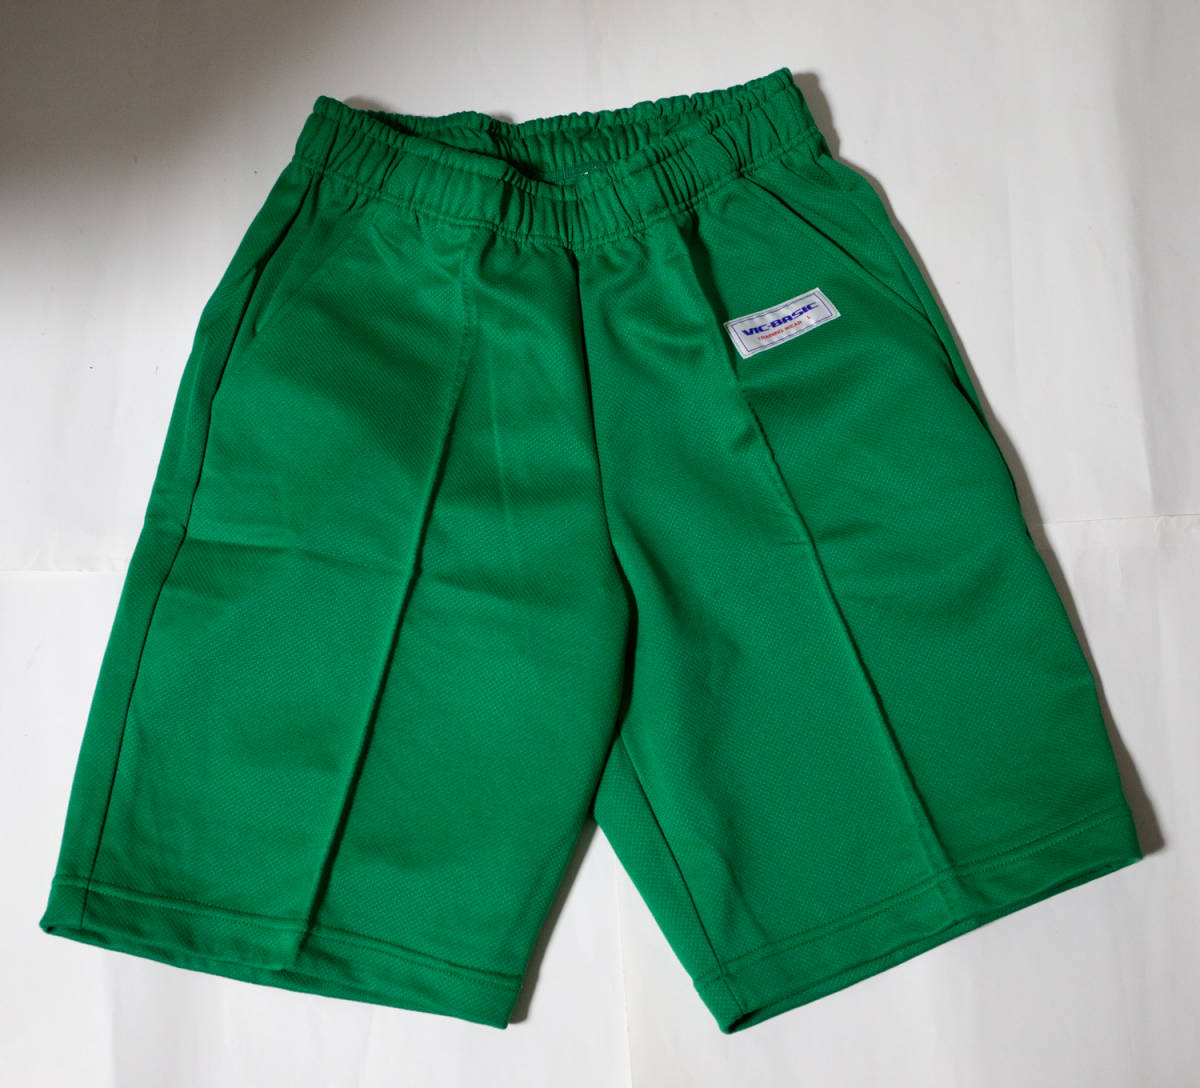  gym uniform * shorts green L new goods unused prompt decision!